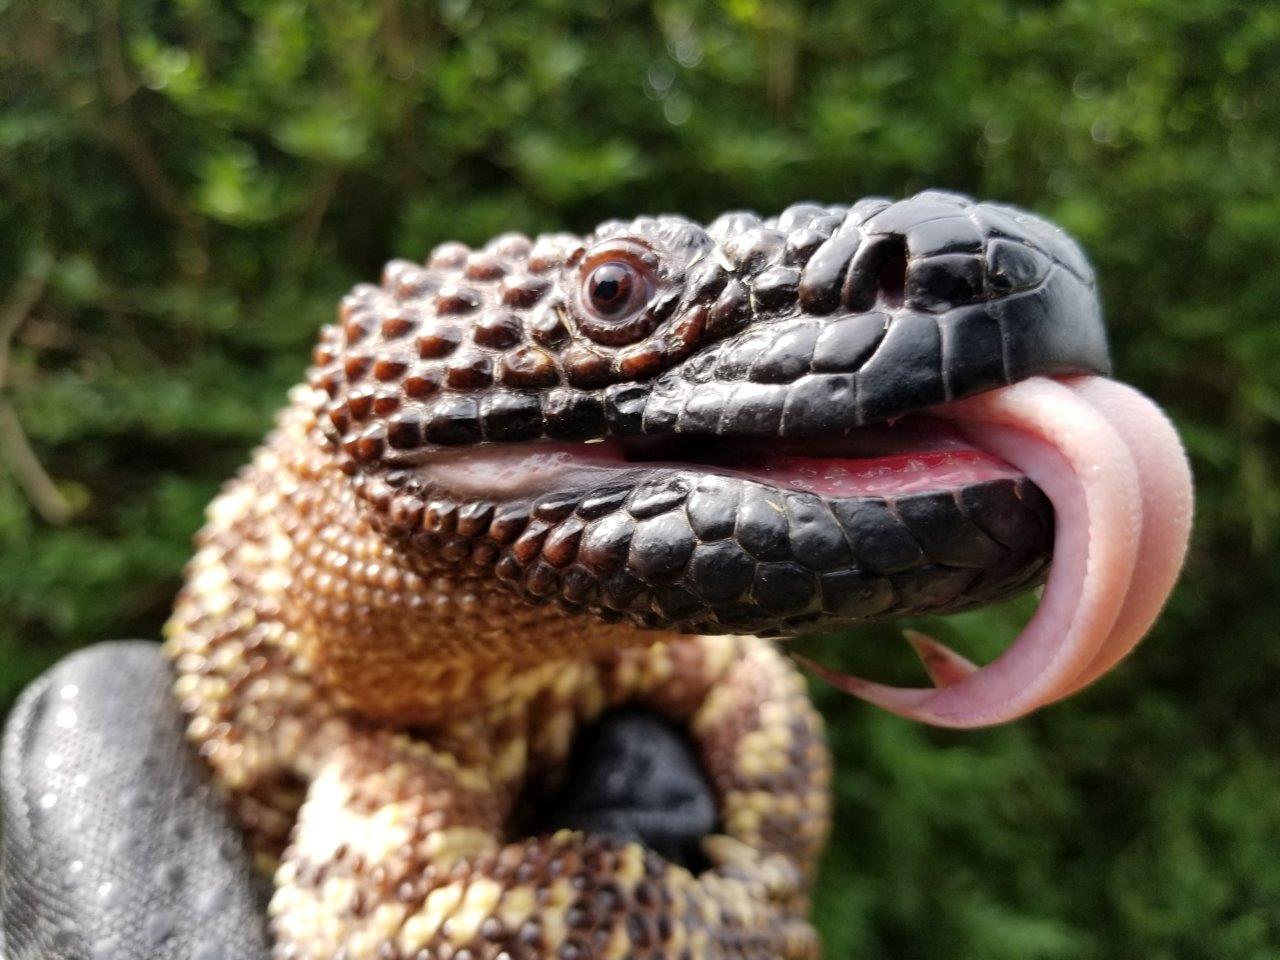 Beaded Lizard photo by Shane Smith